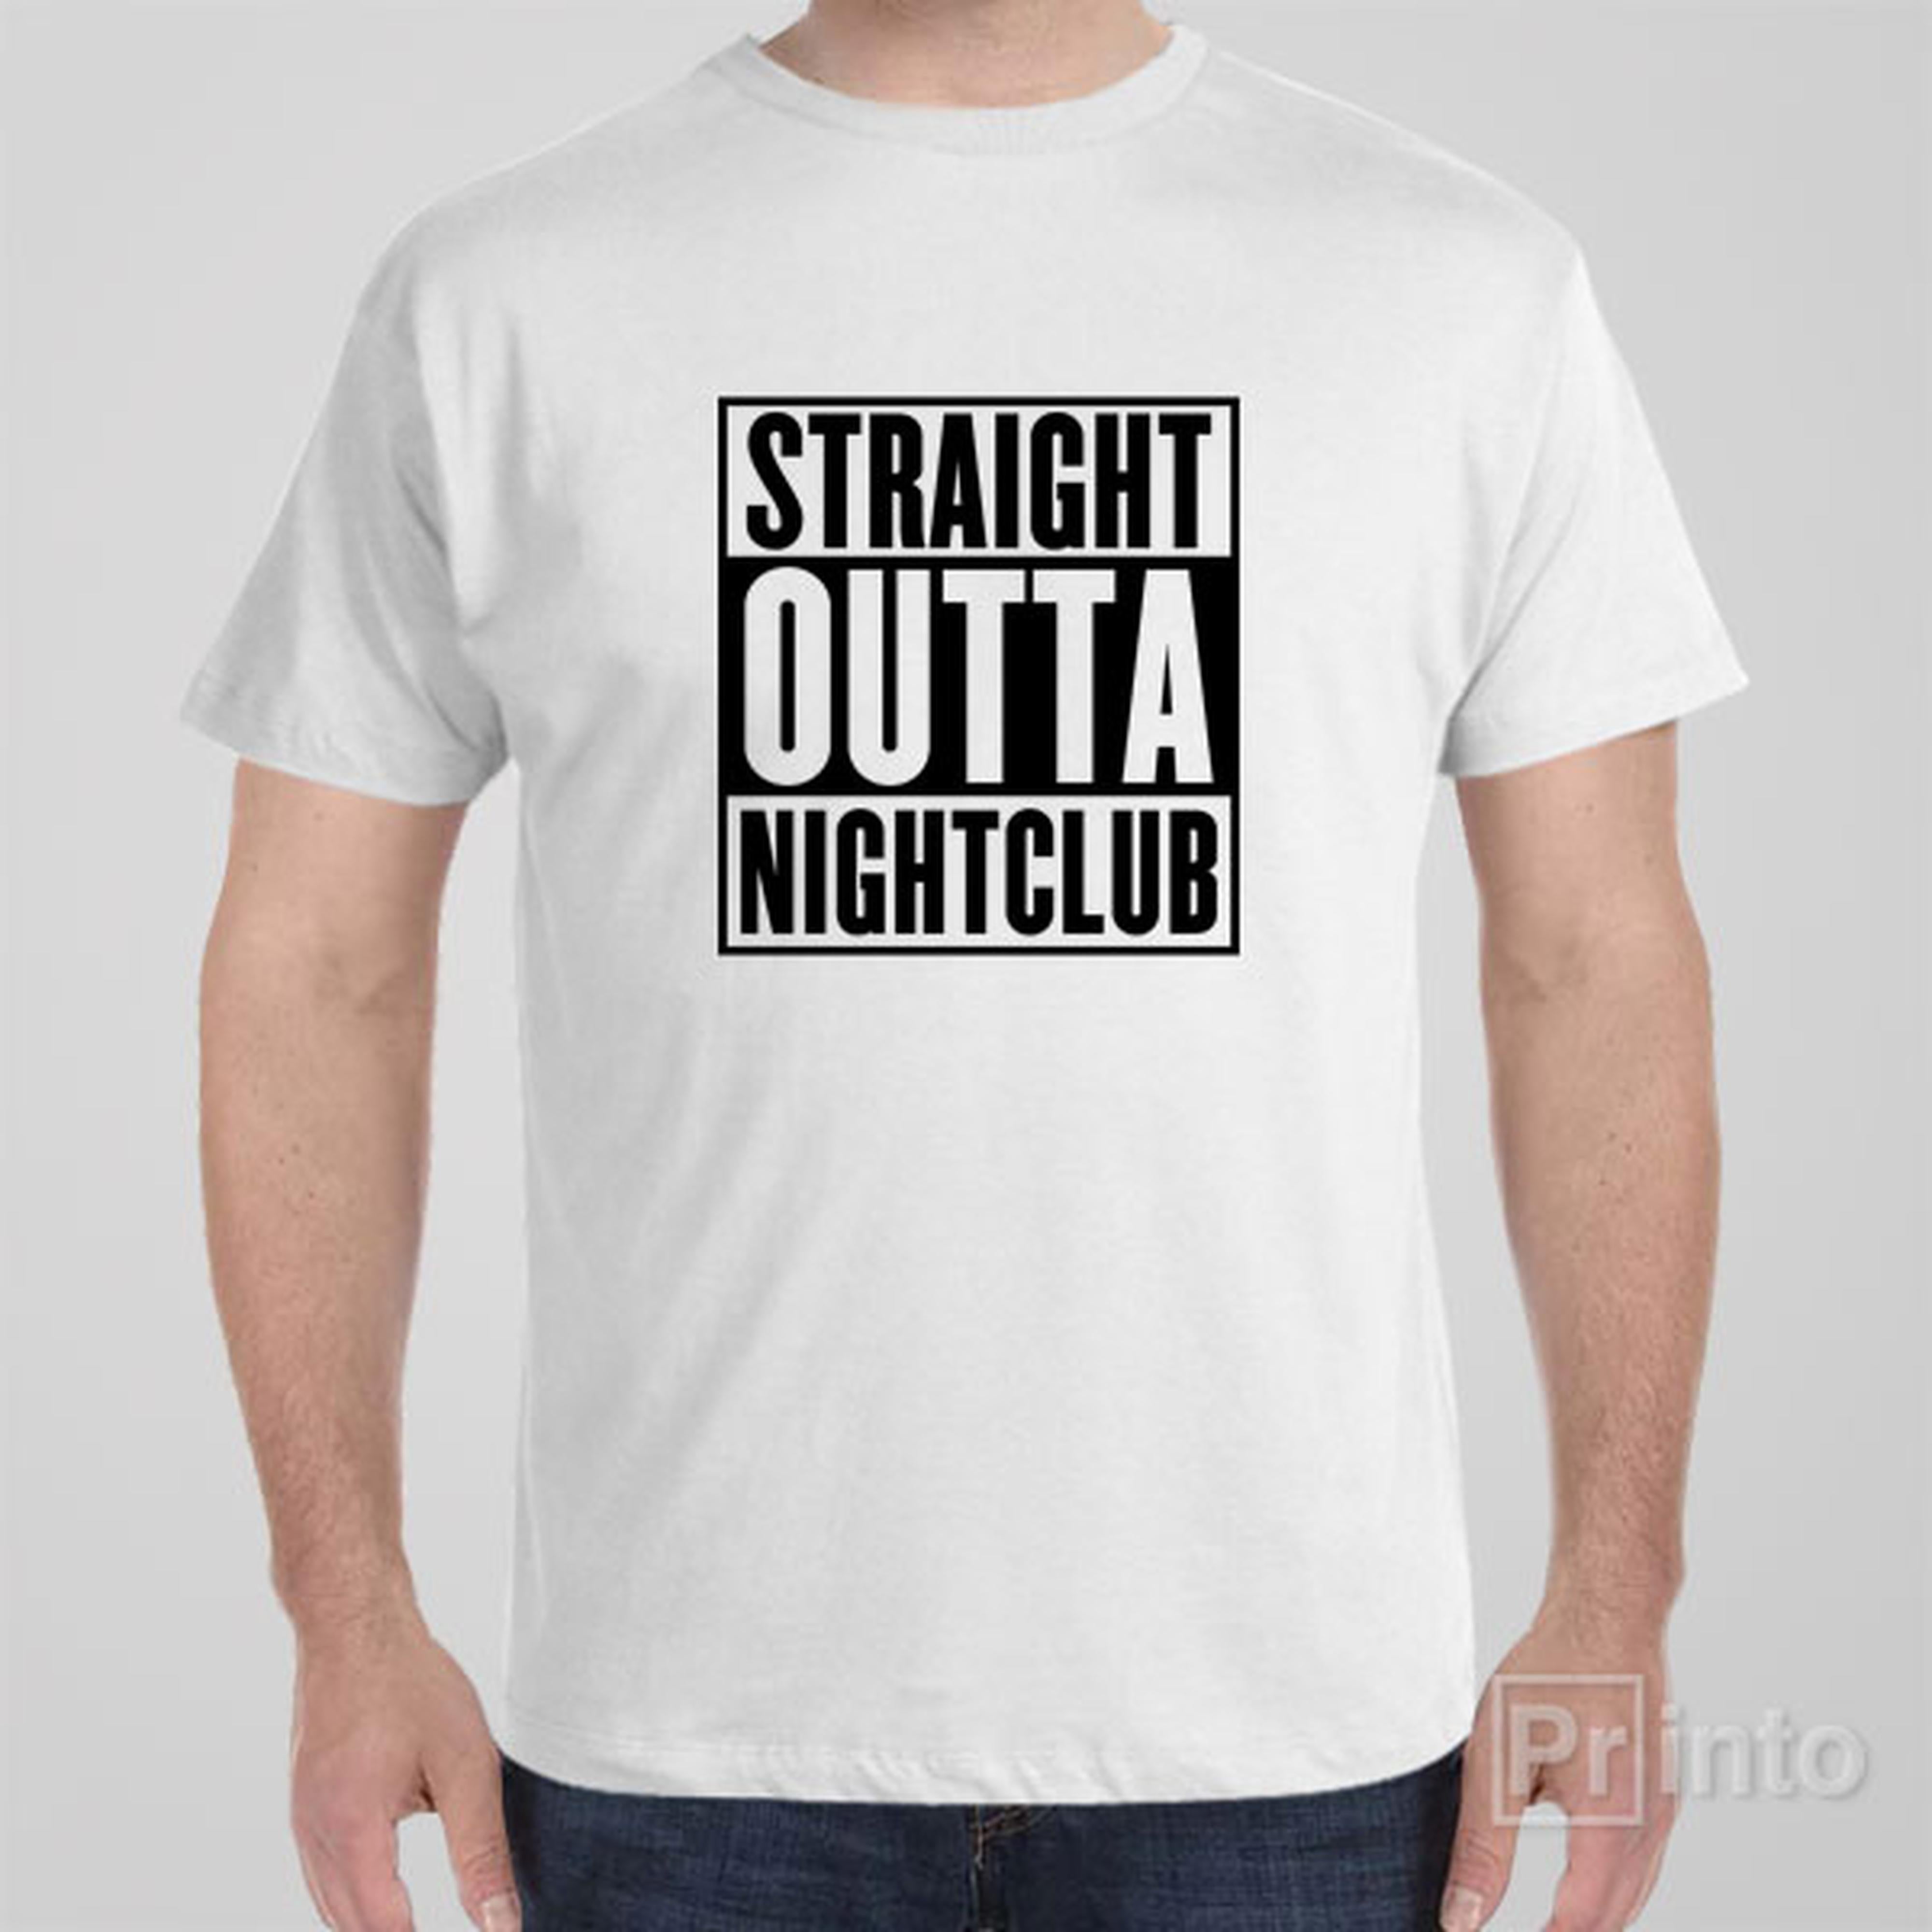 straight-outta-nightclub-t-shirt